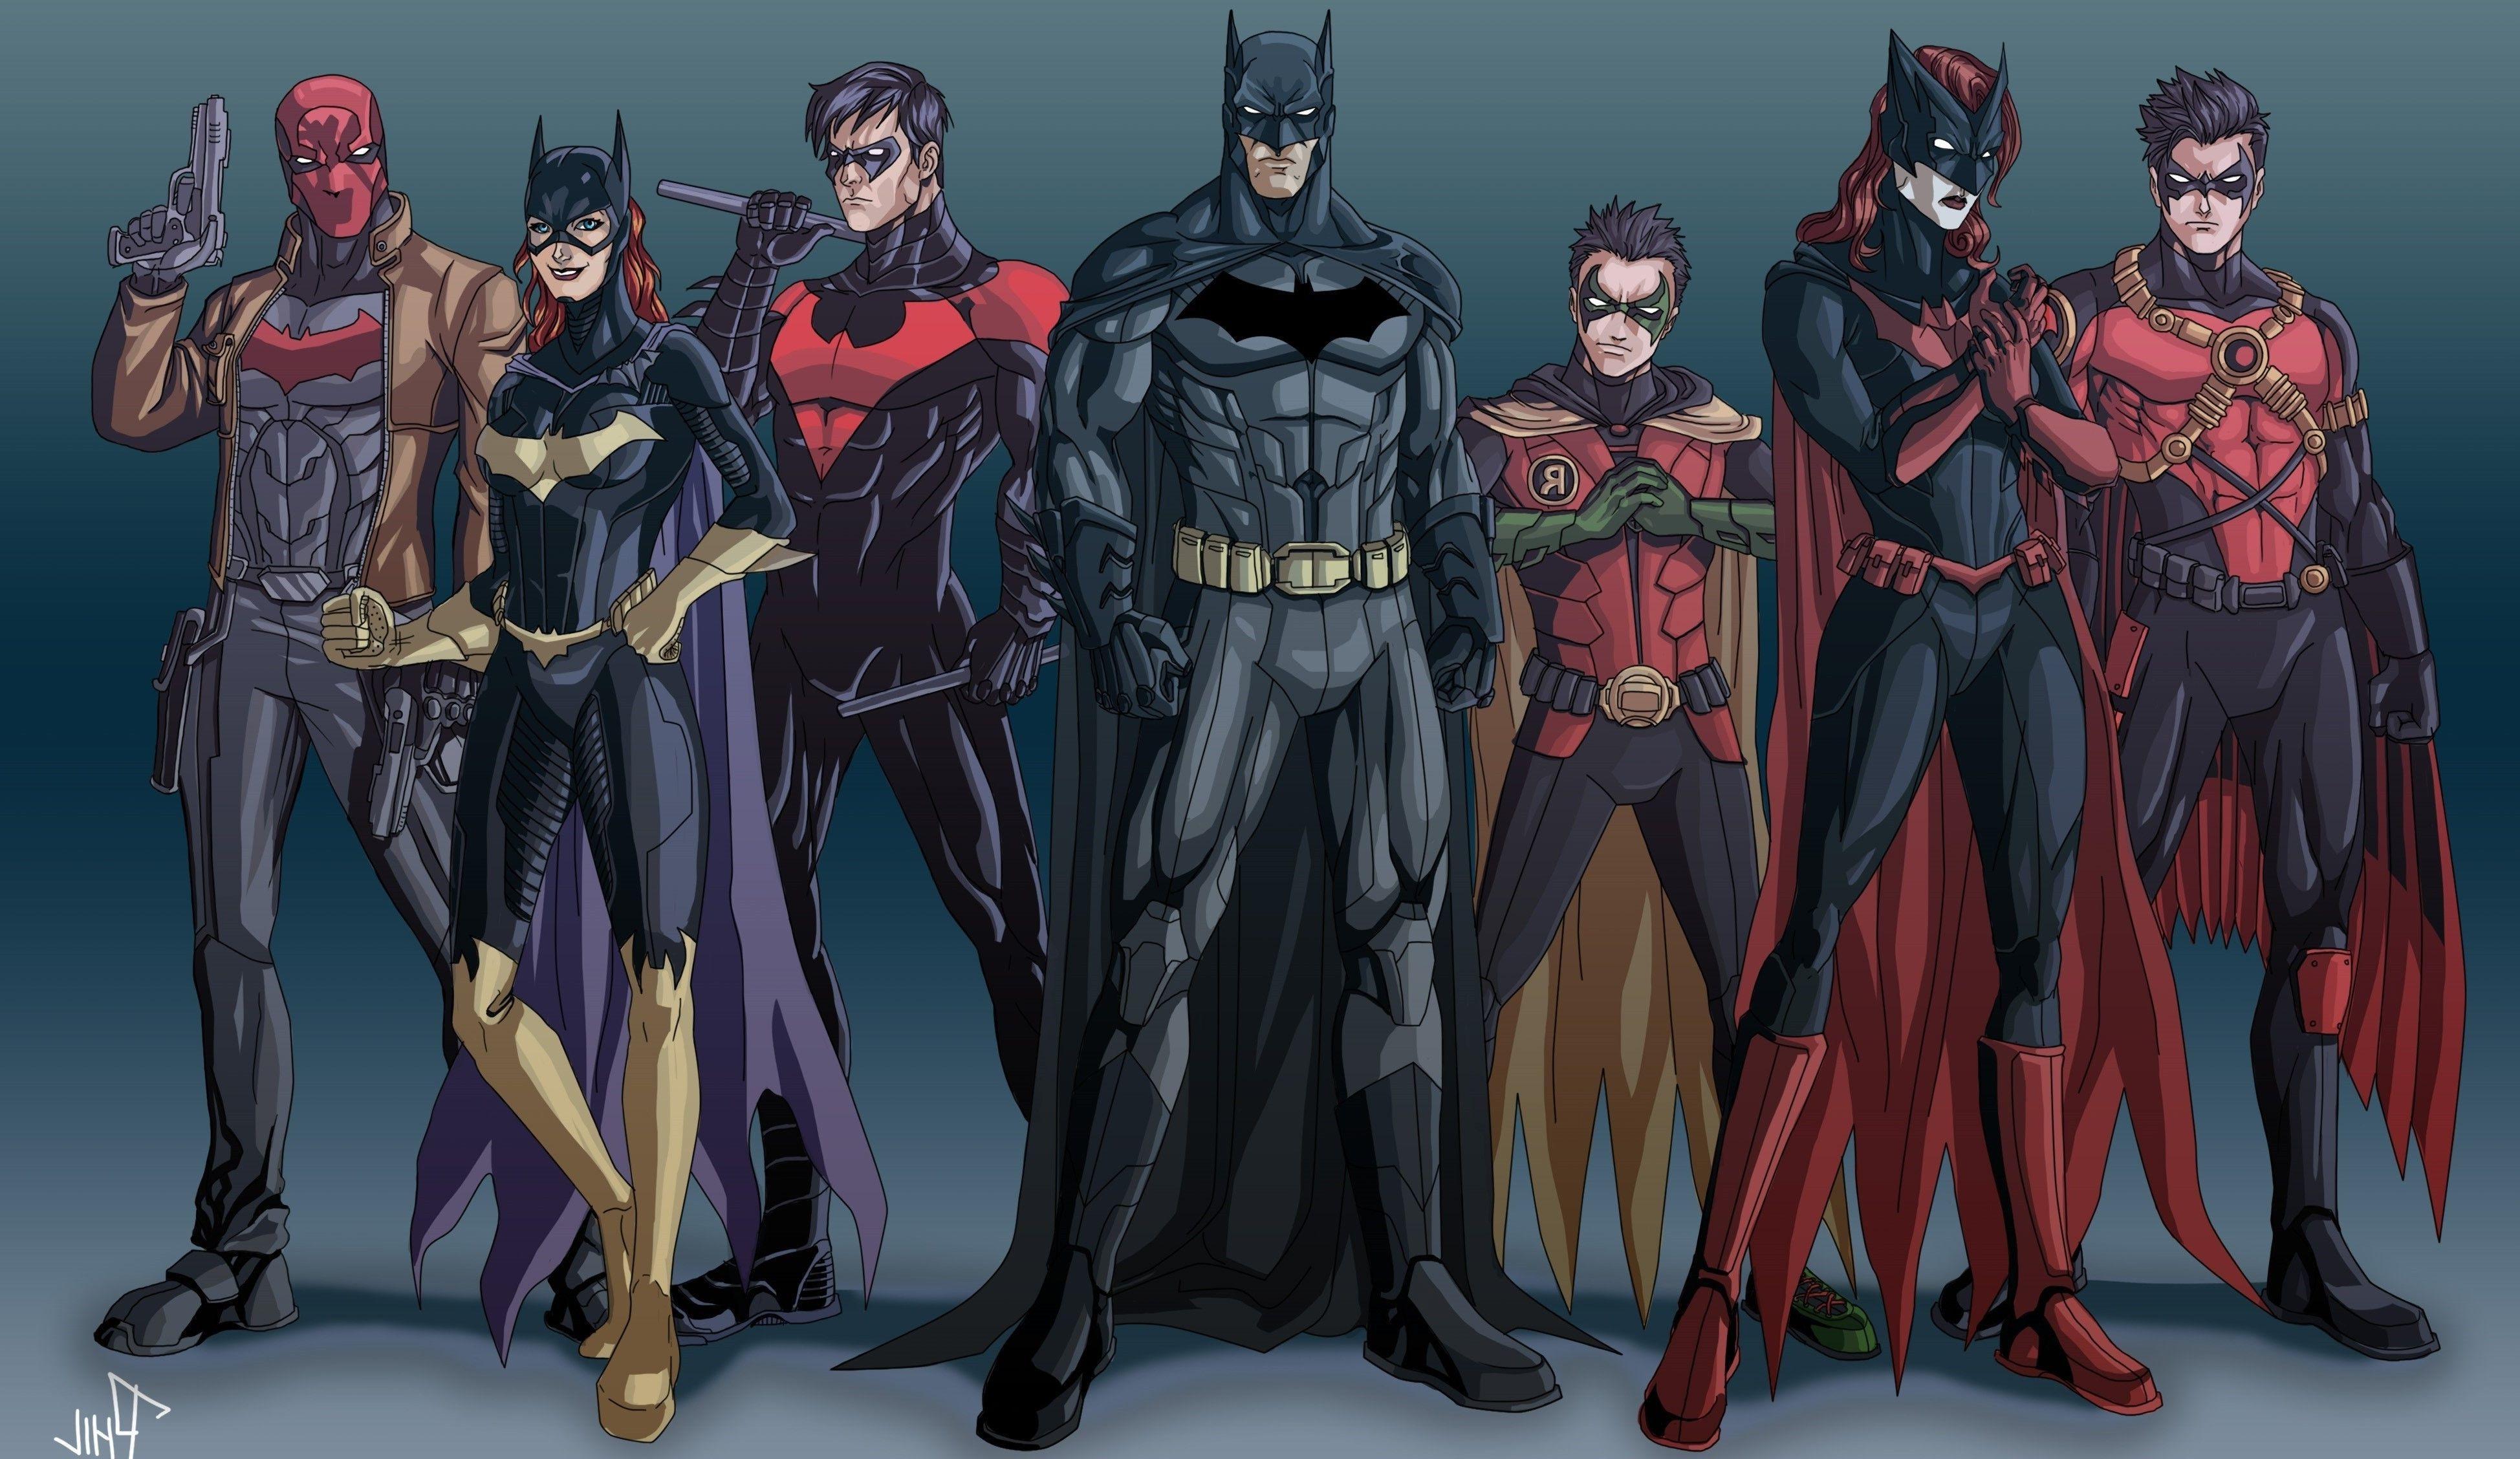 Batman, Robin (character), Nightwing, Batgirl, DC Comics, Red